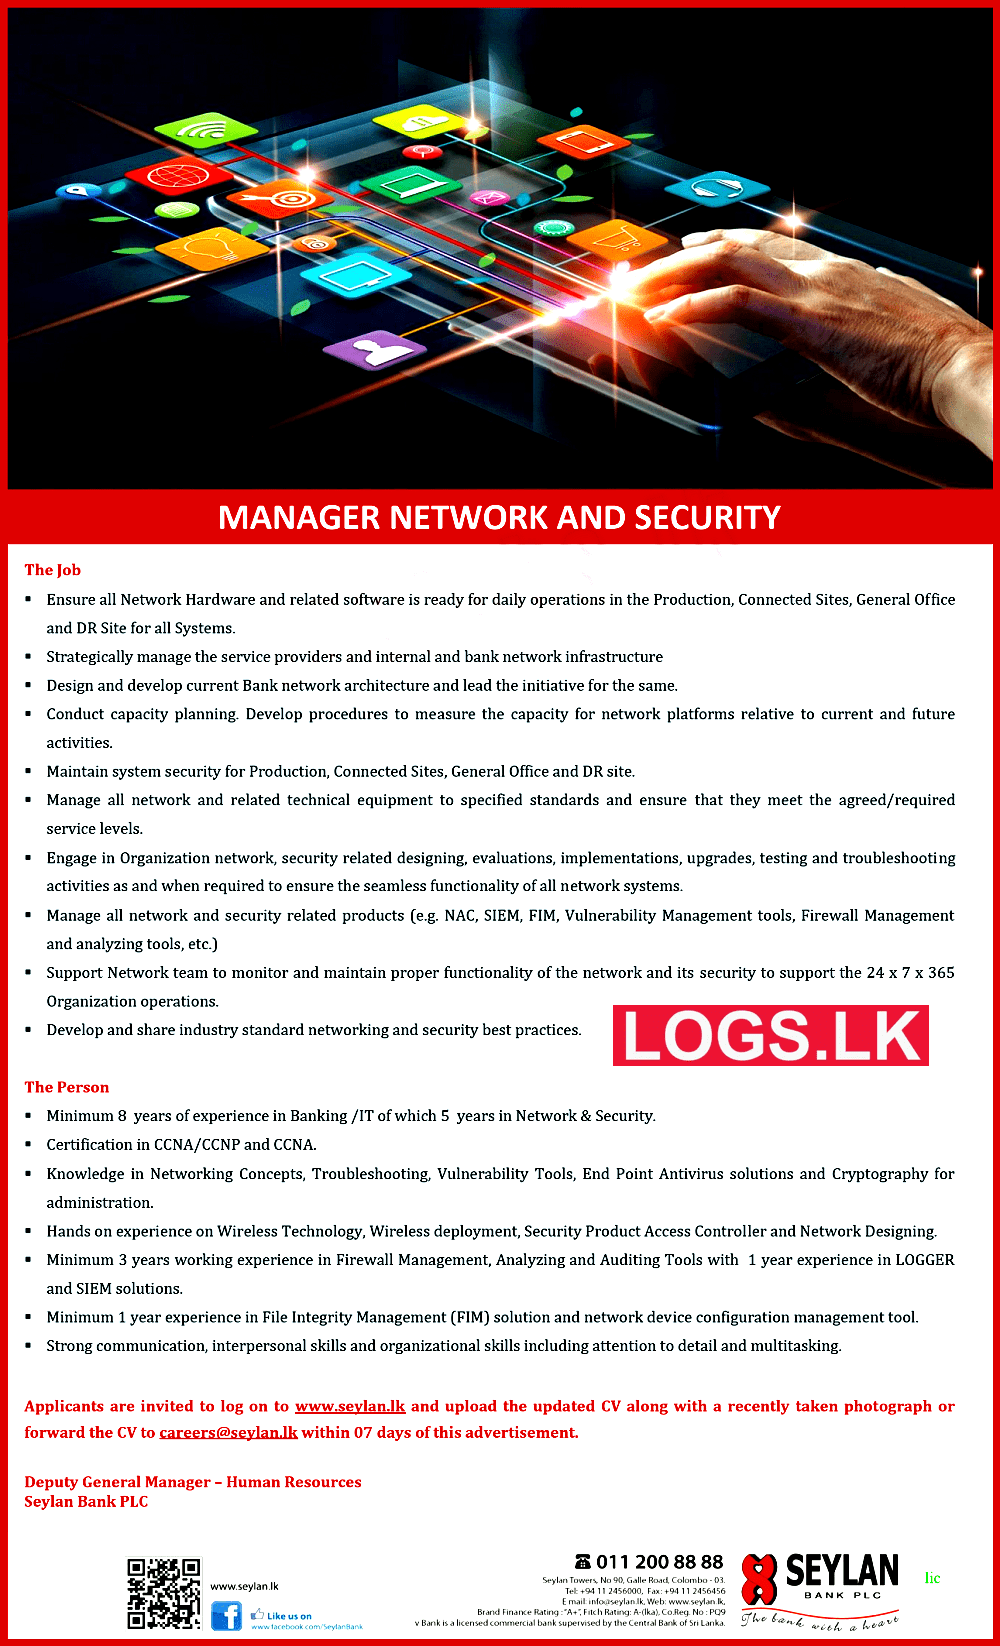 Manager of Network and Security Job Vacancy in Seylan Bank PLC Jobs Vacancies Details